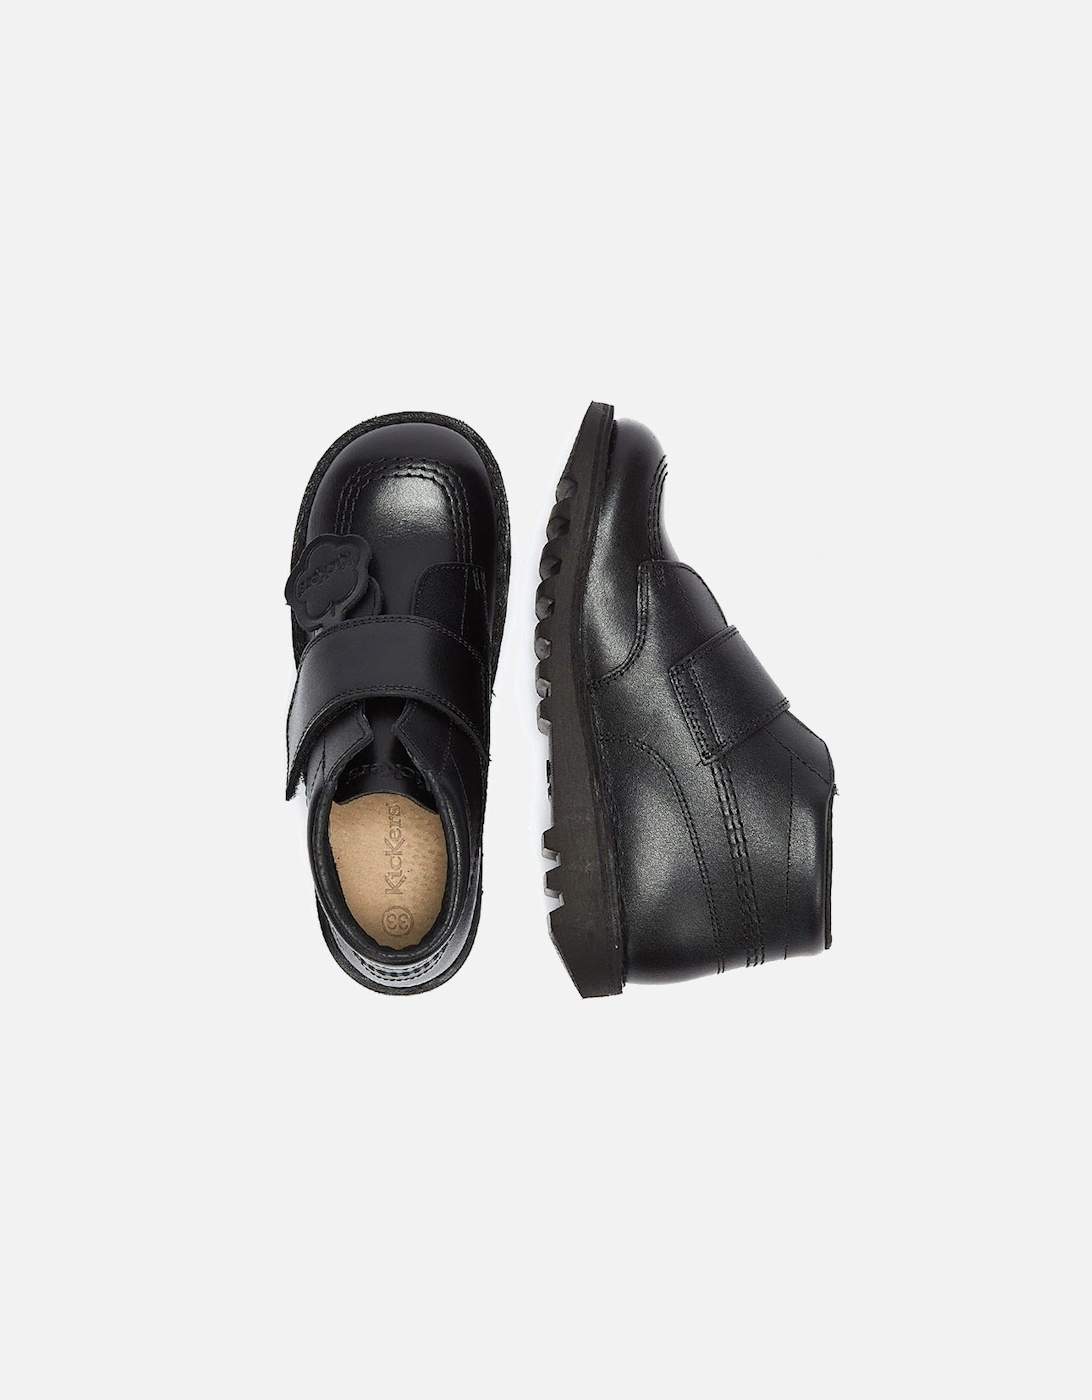 Infant Black Kick Kilo Leather Boots